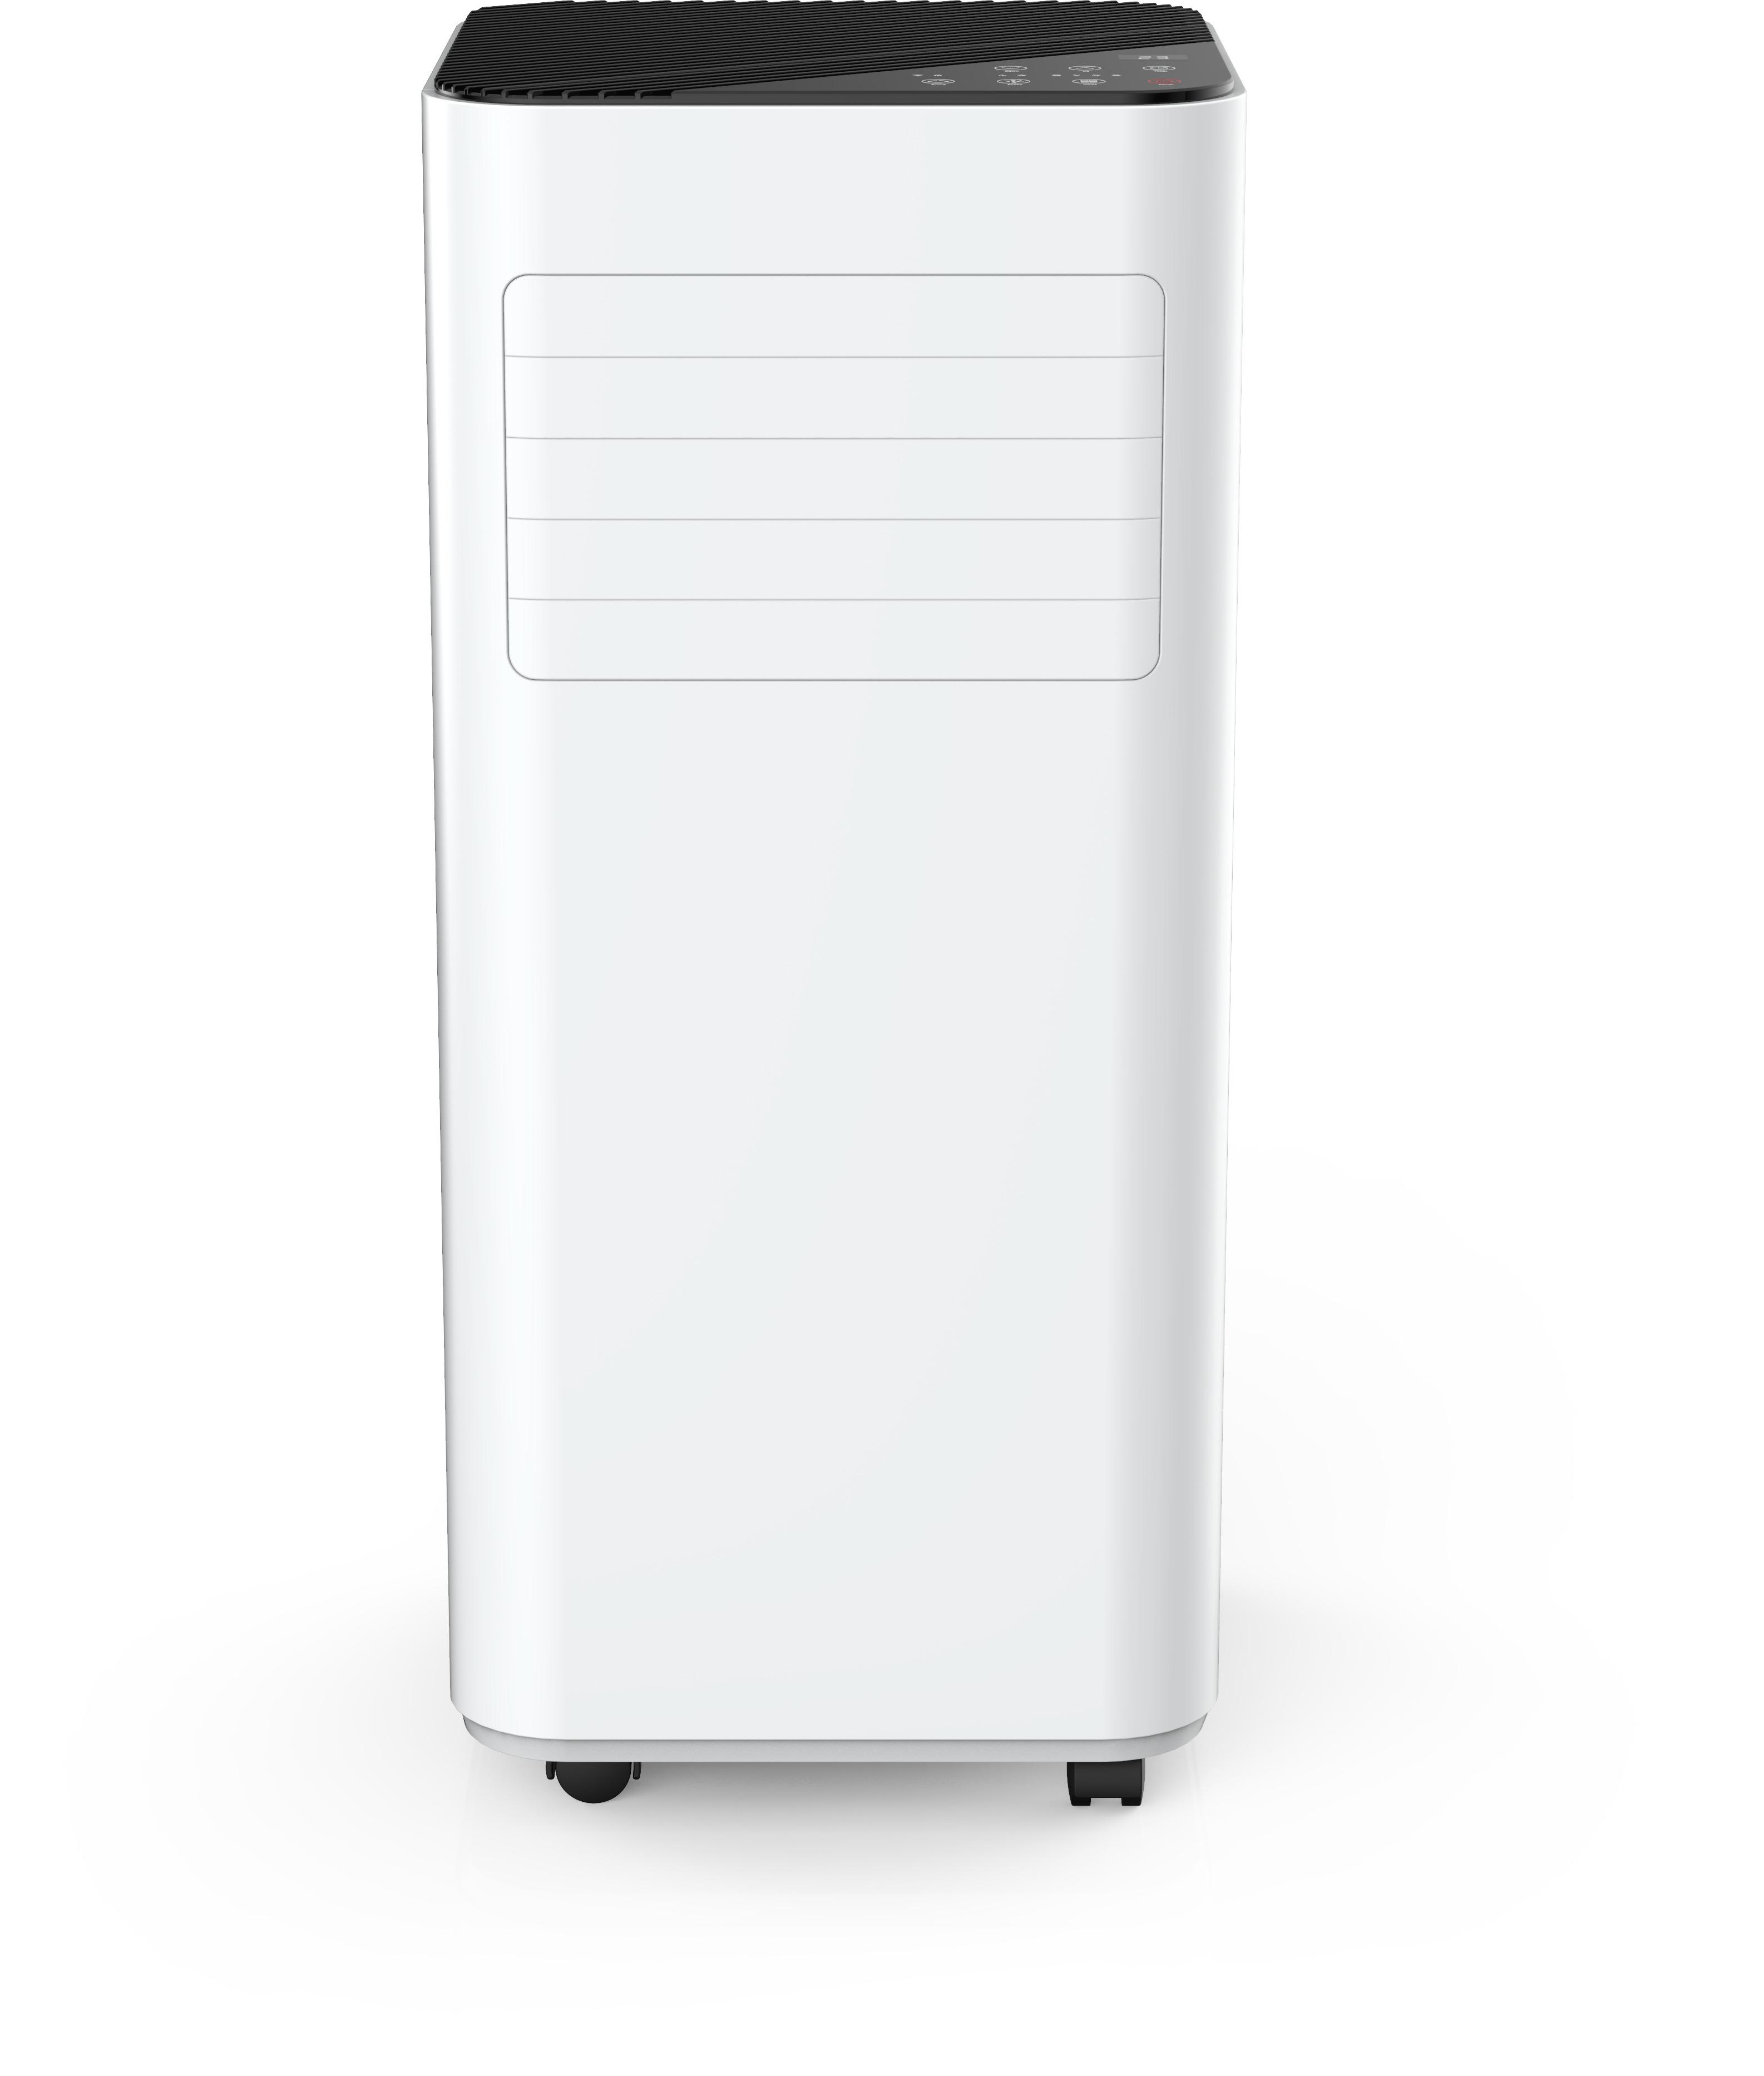 Mobile Klimaanlage Ka8000 B: 32 cm inkl. Fernbedienung - Weiß, Basics (31,6/70,3/32cm) - Nabo